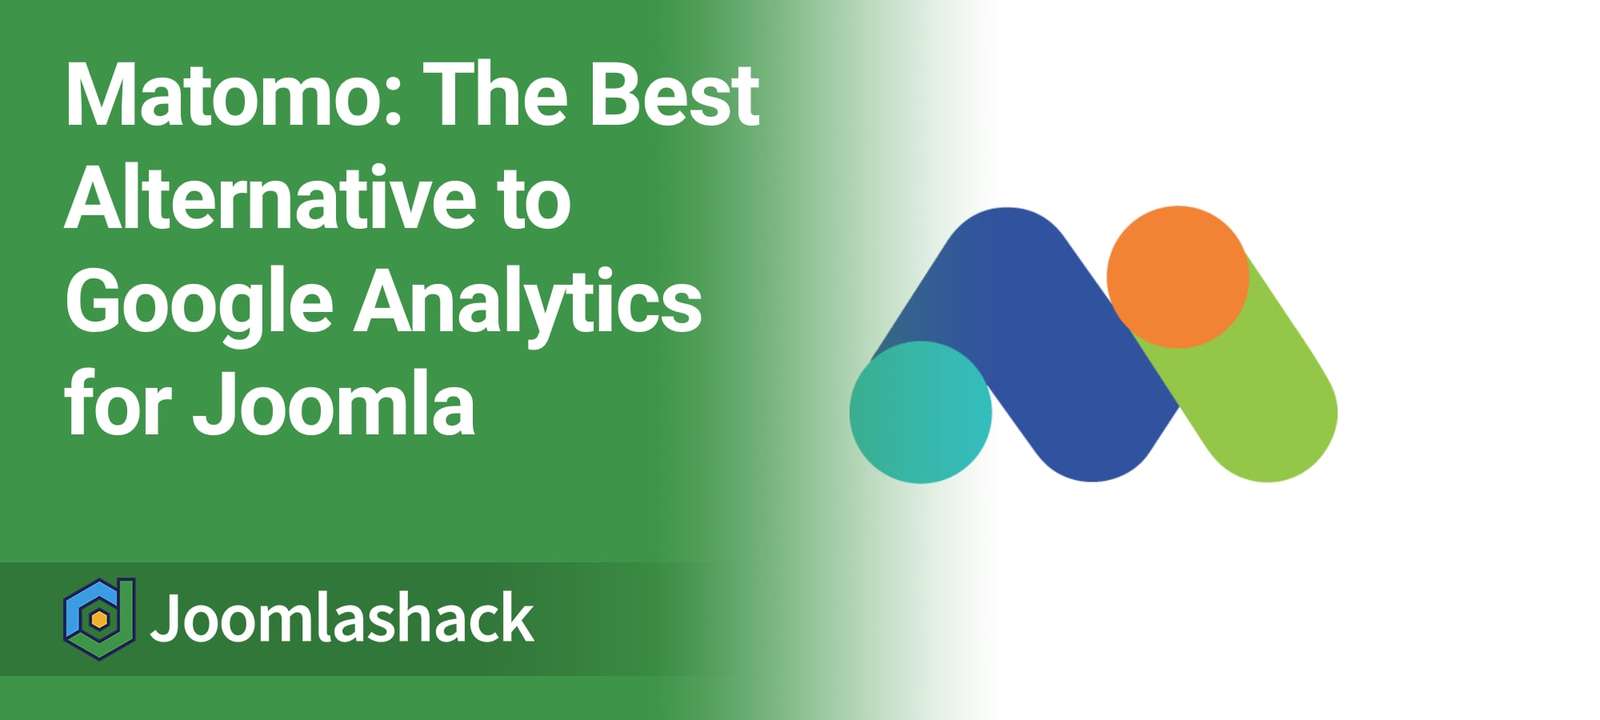 Matomo: The Best Alternative to Google Analytics for Joomla